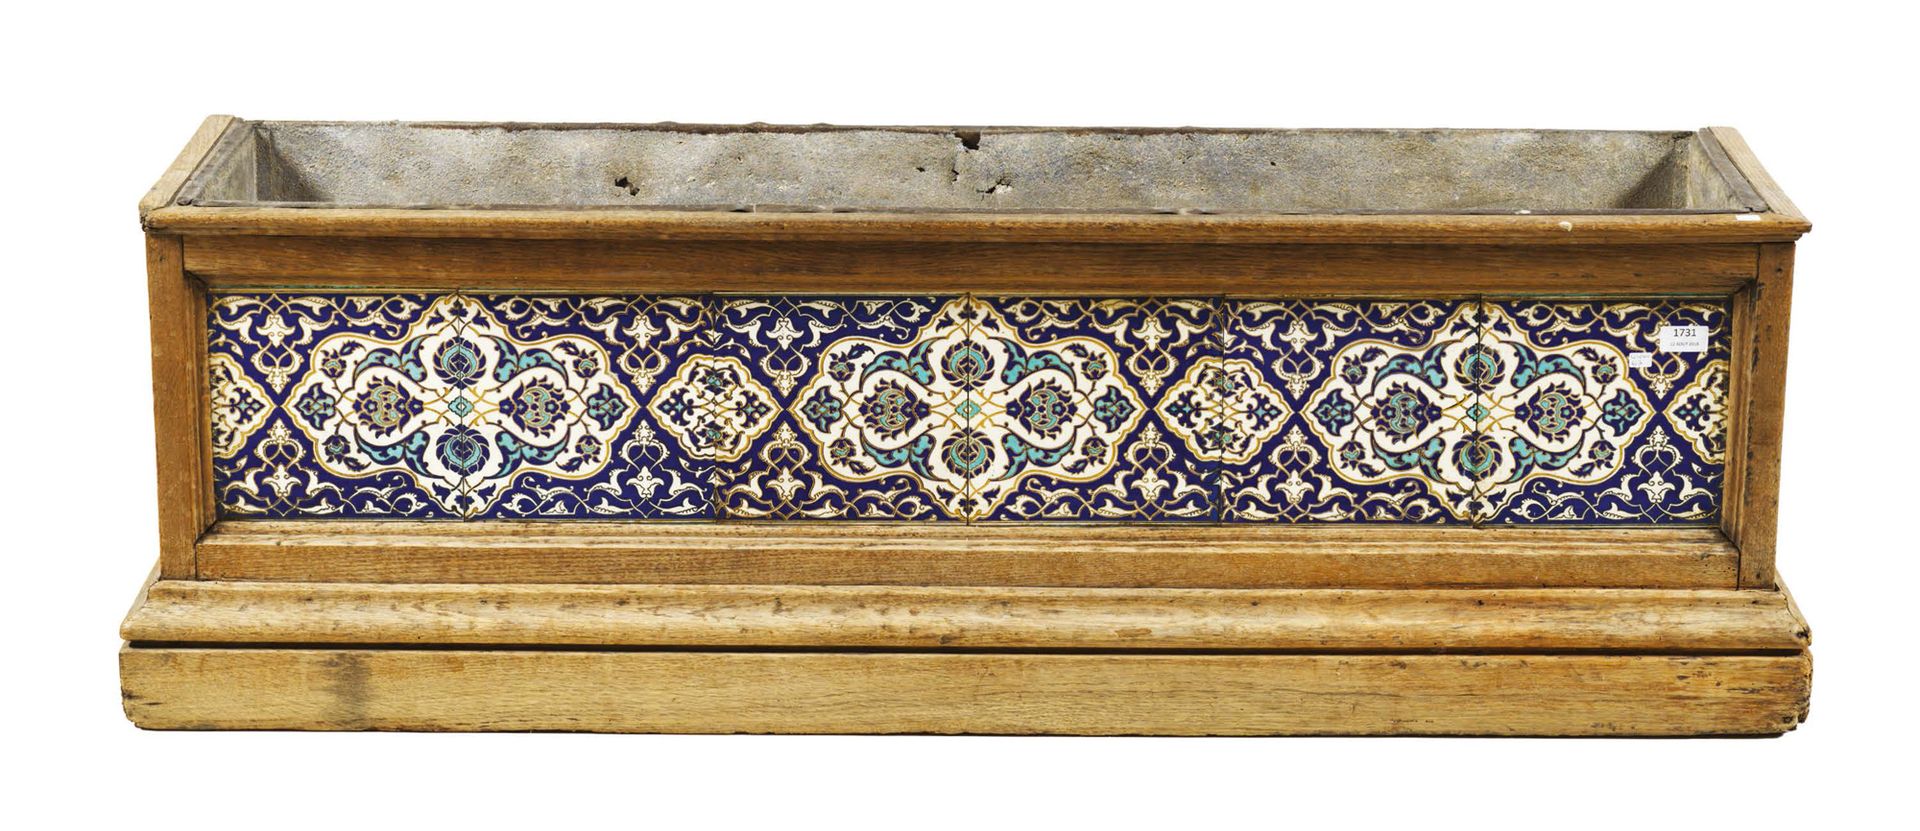 Null JARDINER.木头，锡器和一块瓷砖。
一个花盆，上面有一块英国瓷砖，是根据16世纪Iznik制造的土耳其瓷砖设计的。面板上有钴色、绿松石色和白色的&hellip;